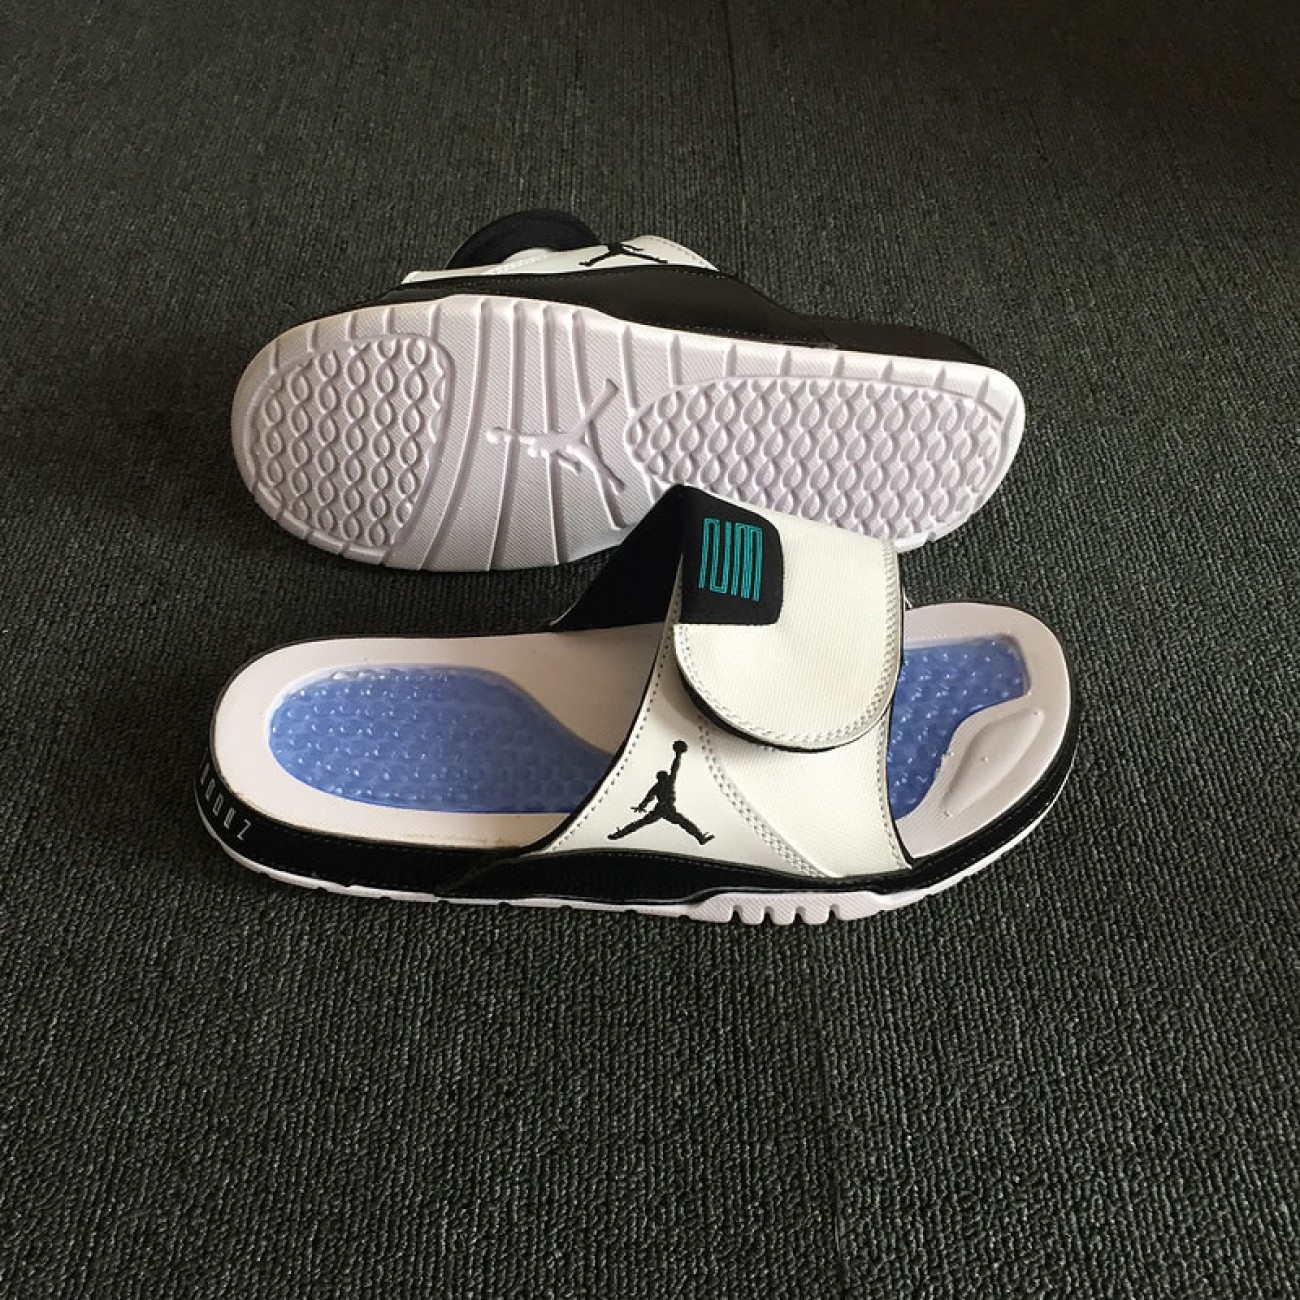 Air Jordan Hydro XI AJ11 White Black Sandals Slippers